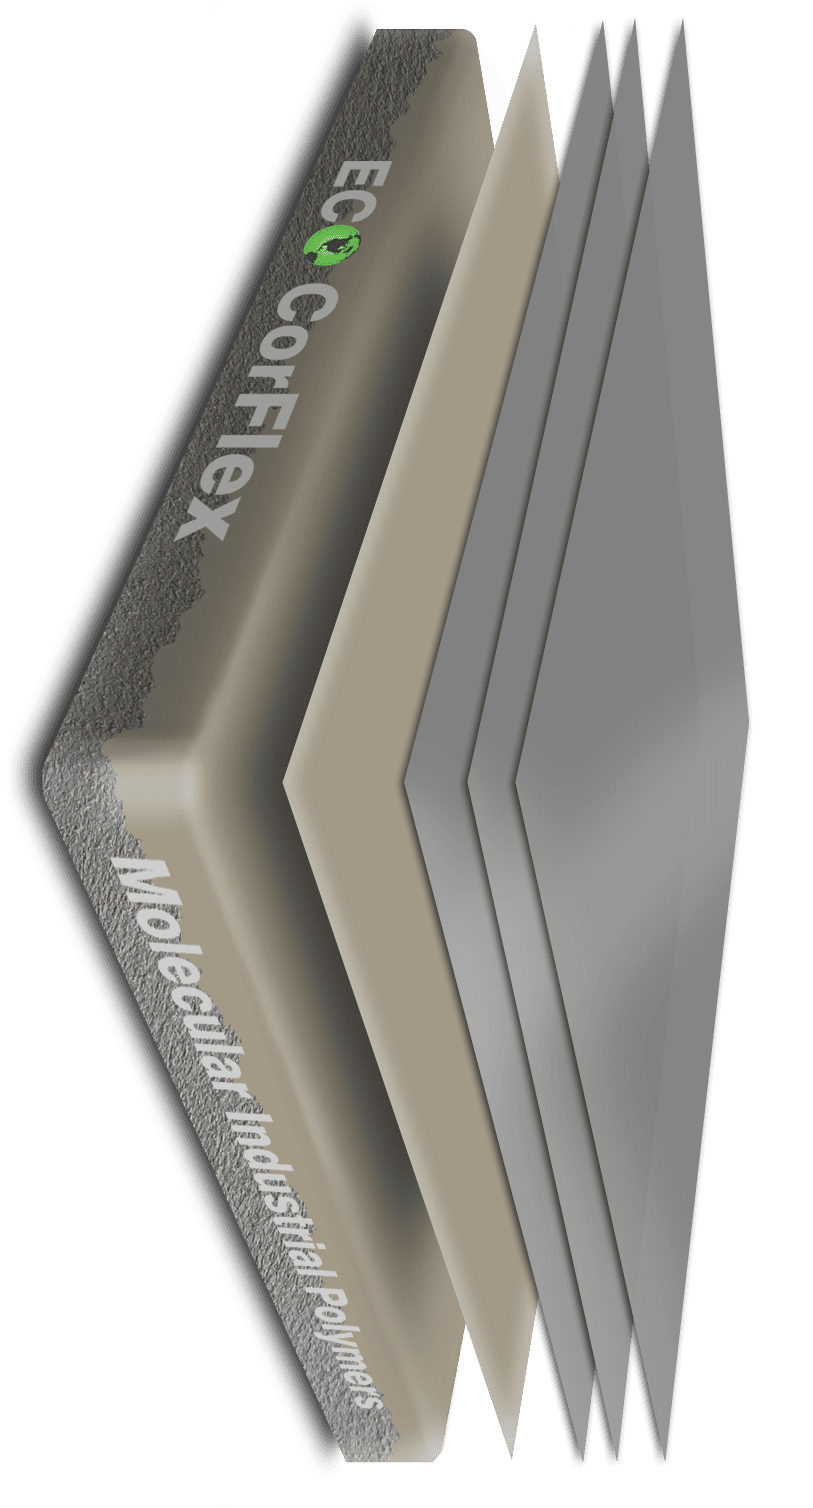 Sealer for basement walls elastomeric moisture mitigation